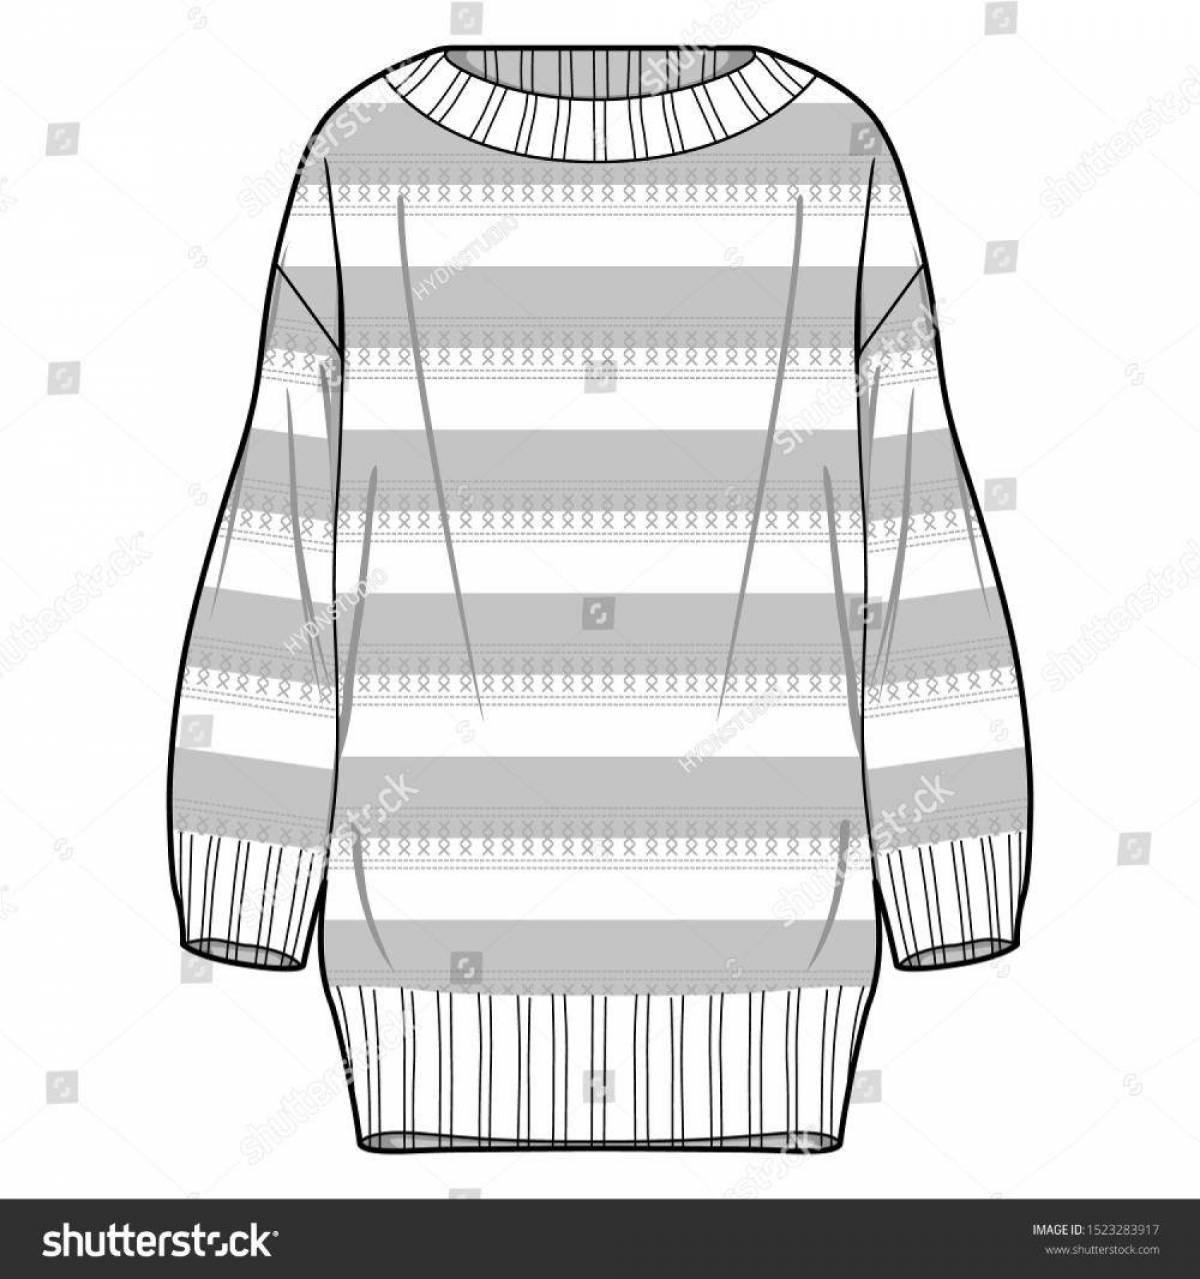 Fun coloring sweater for preschoolers